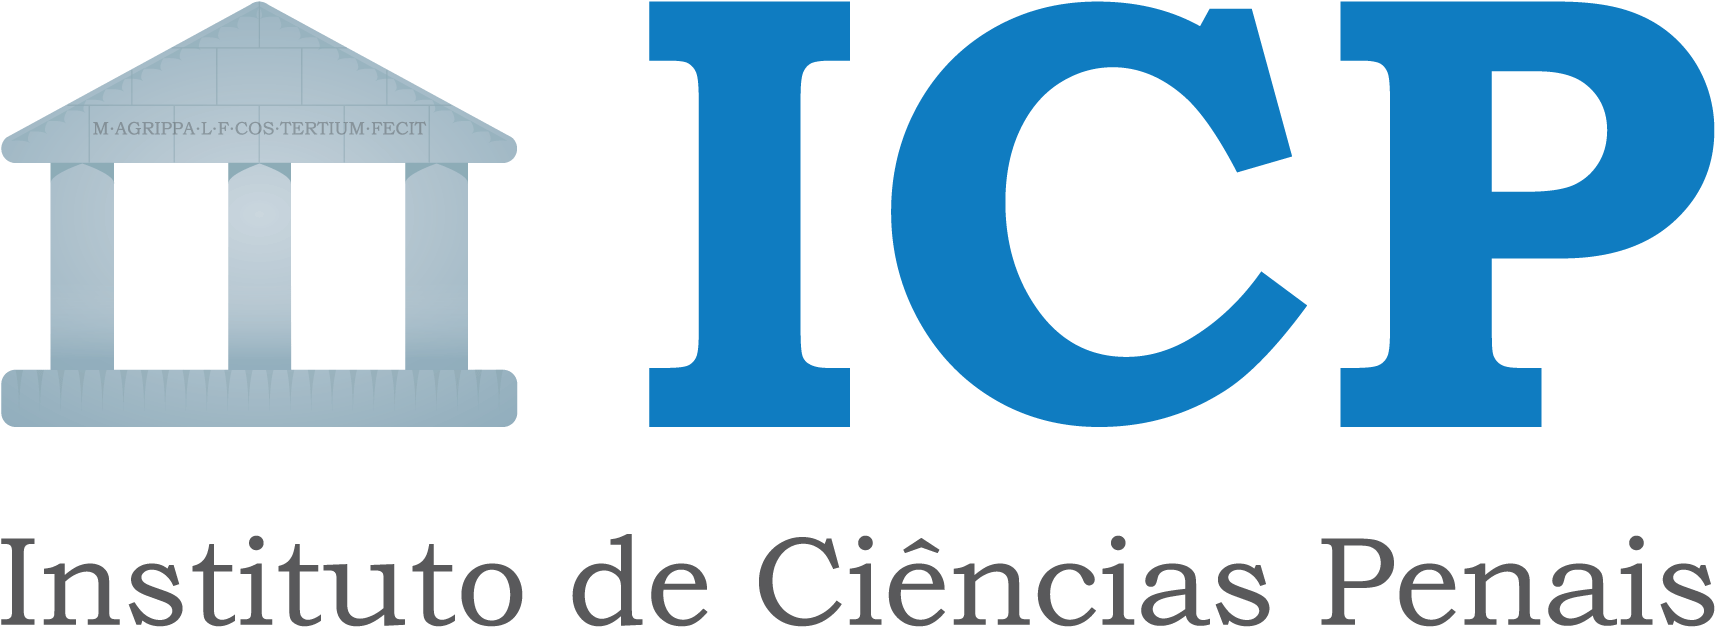 Logotipo do ICP